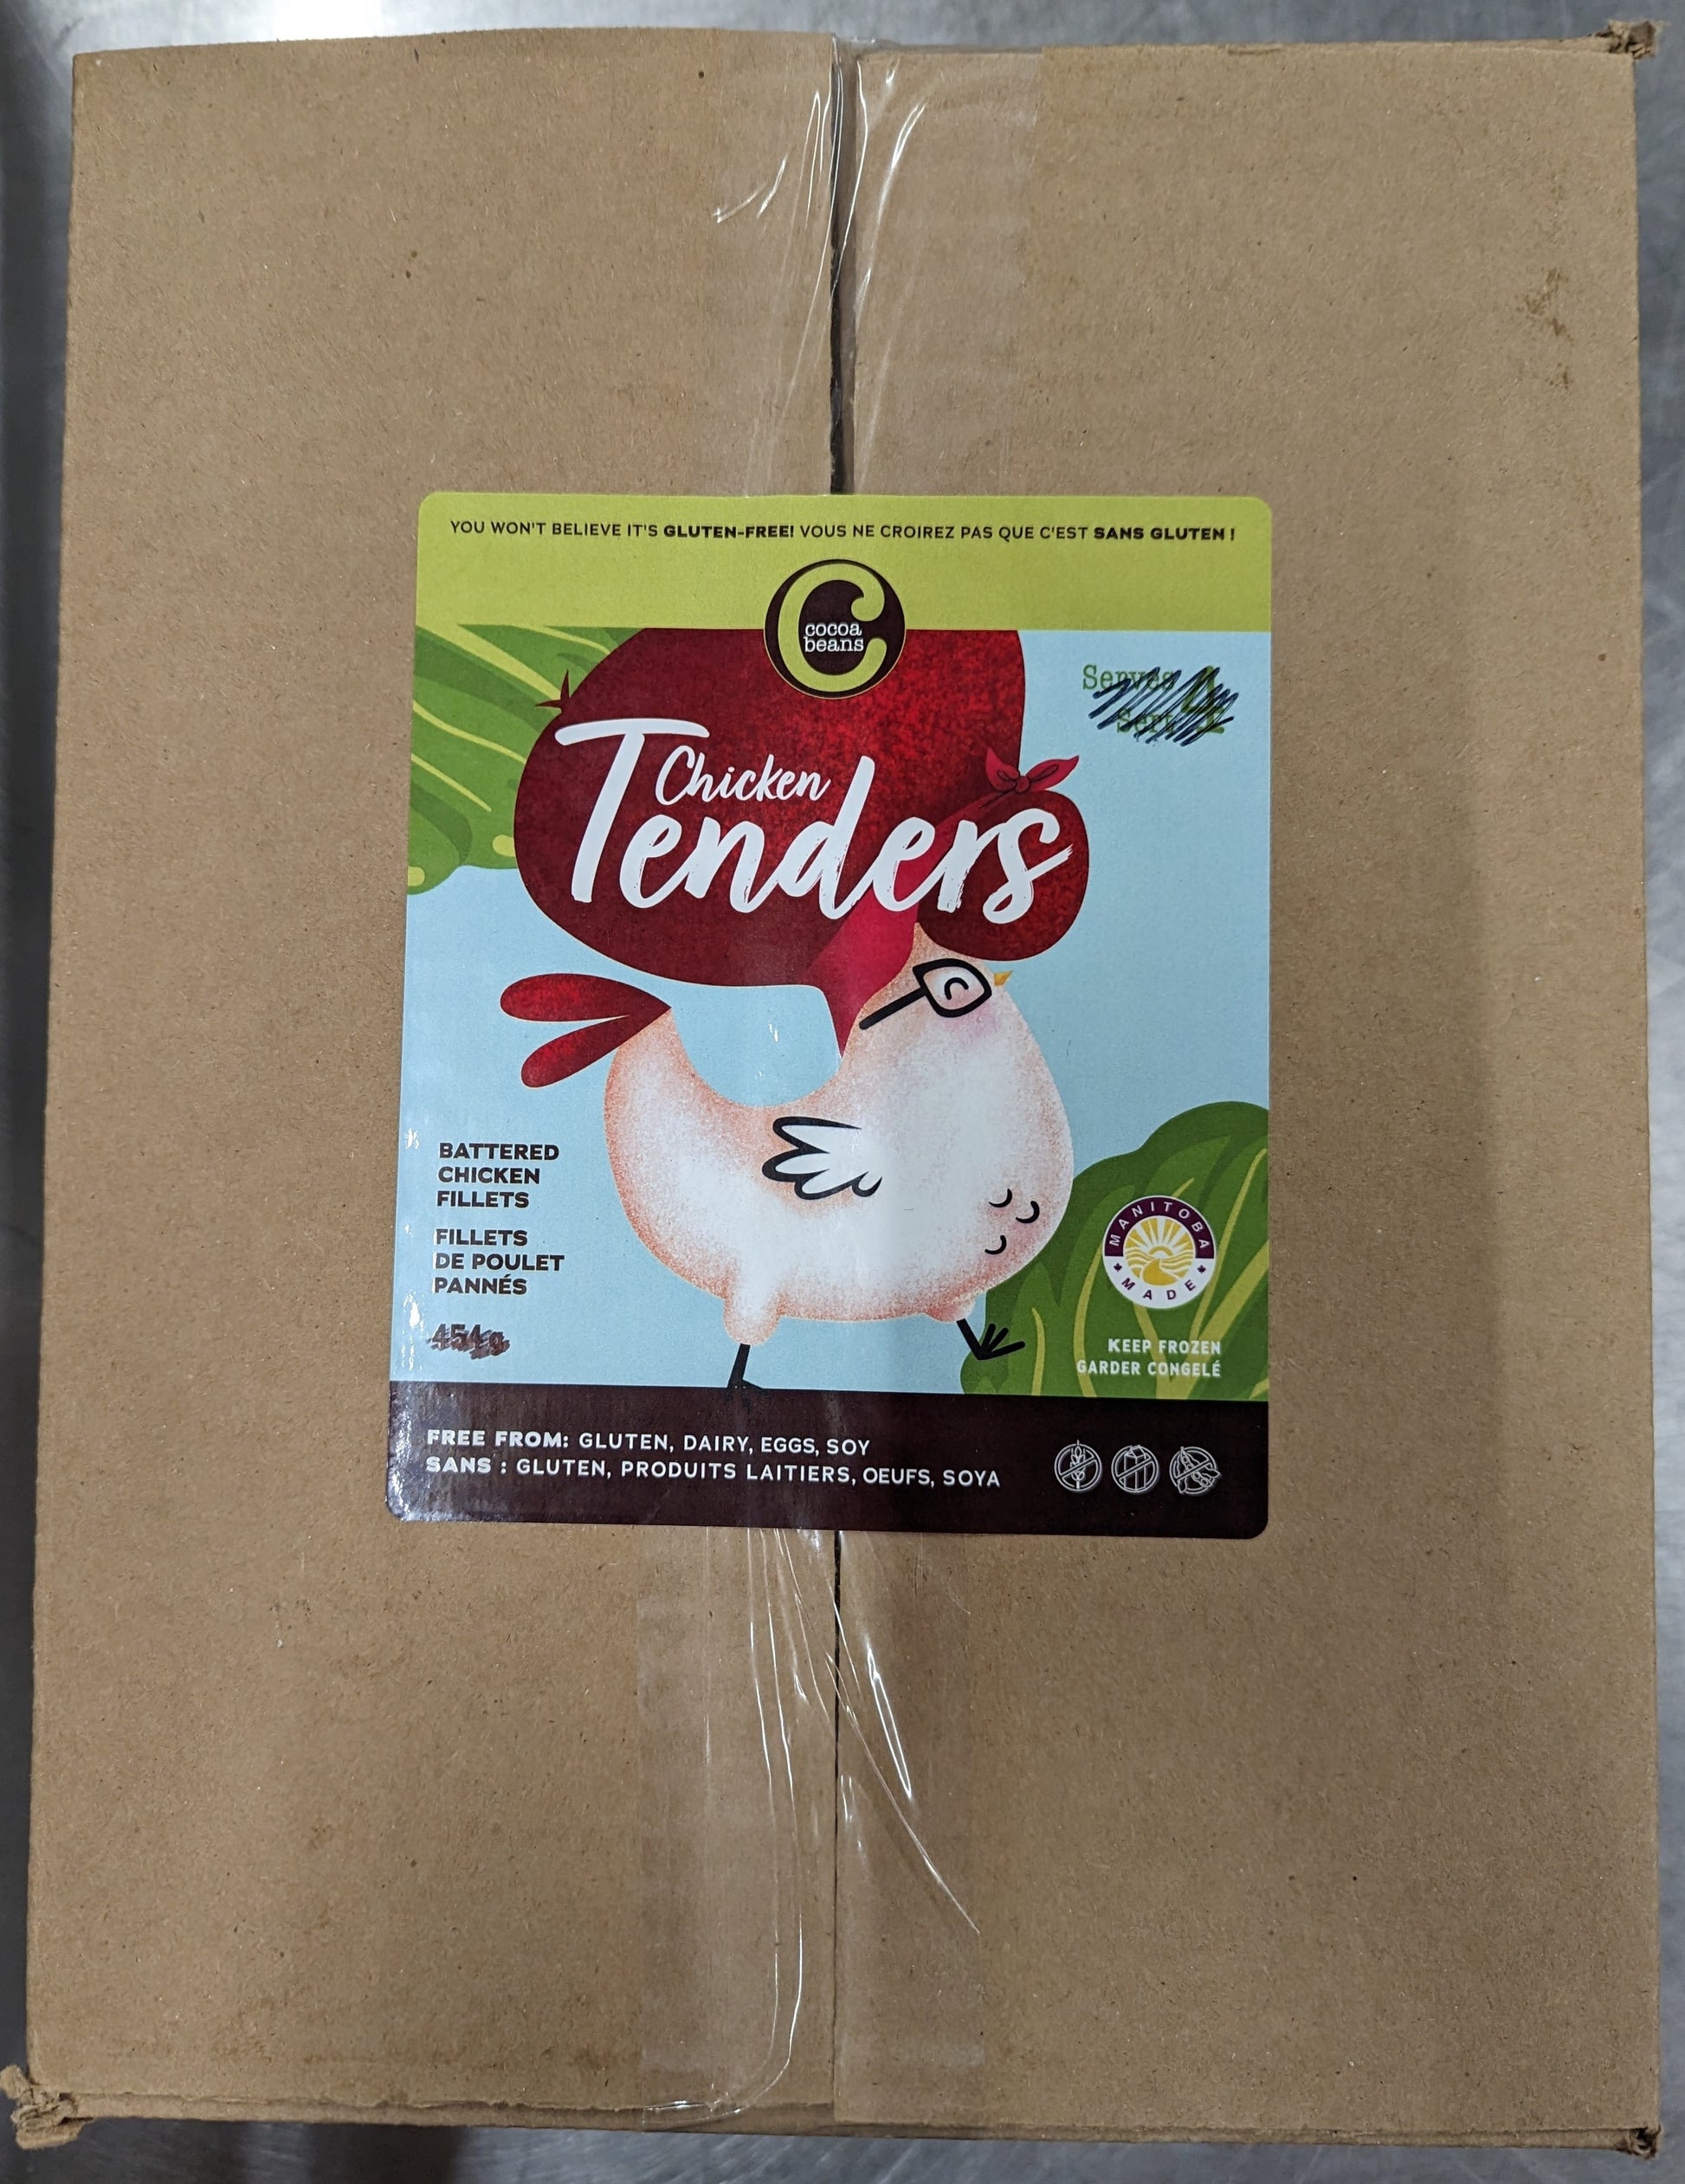 gluten-free chicken tenders